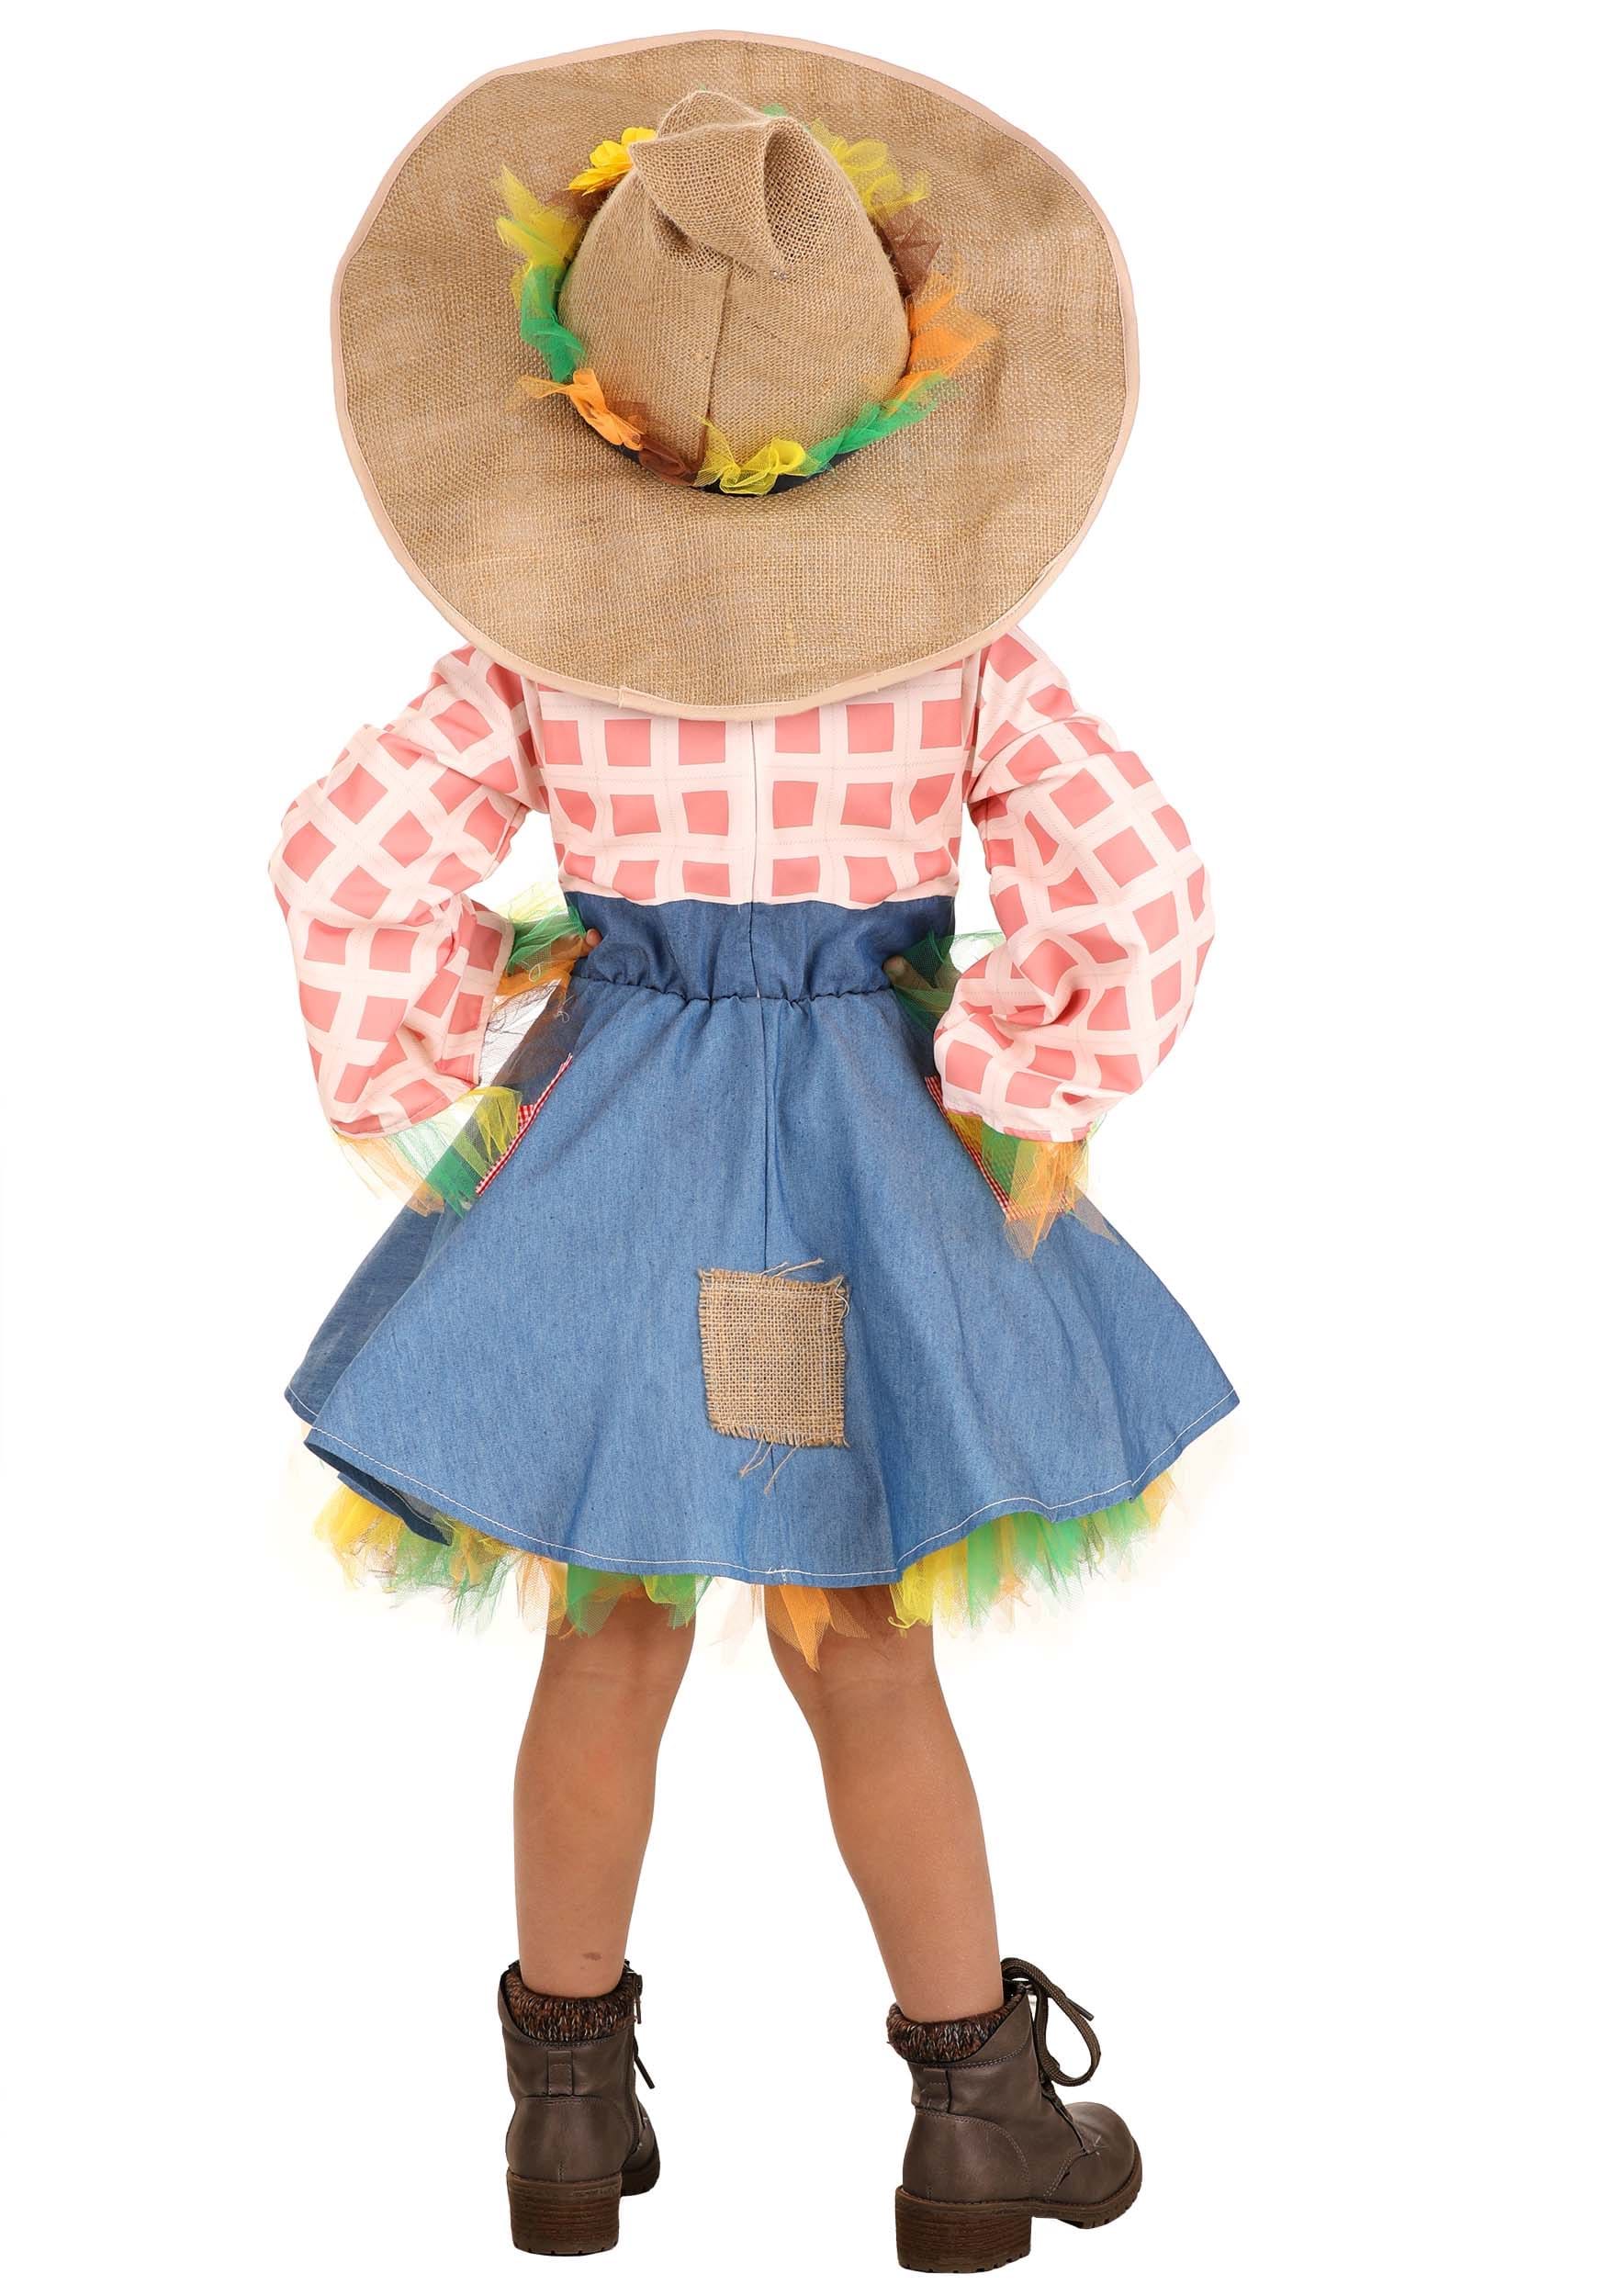 Scarecrow Sweetie Toddler Costume